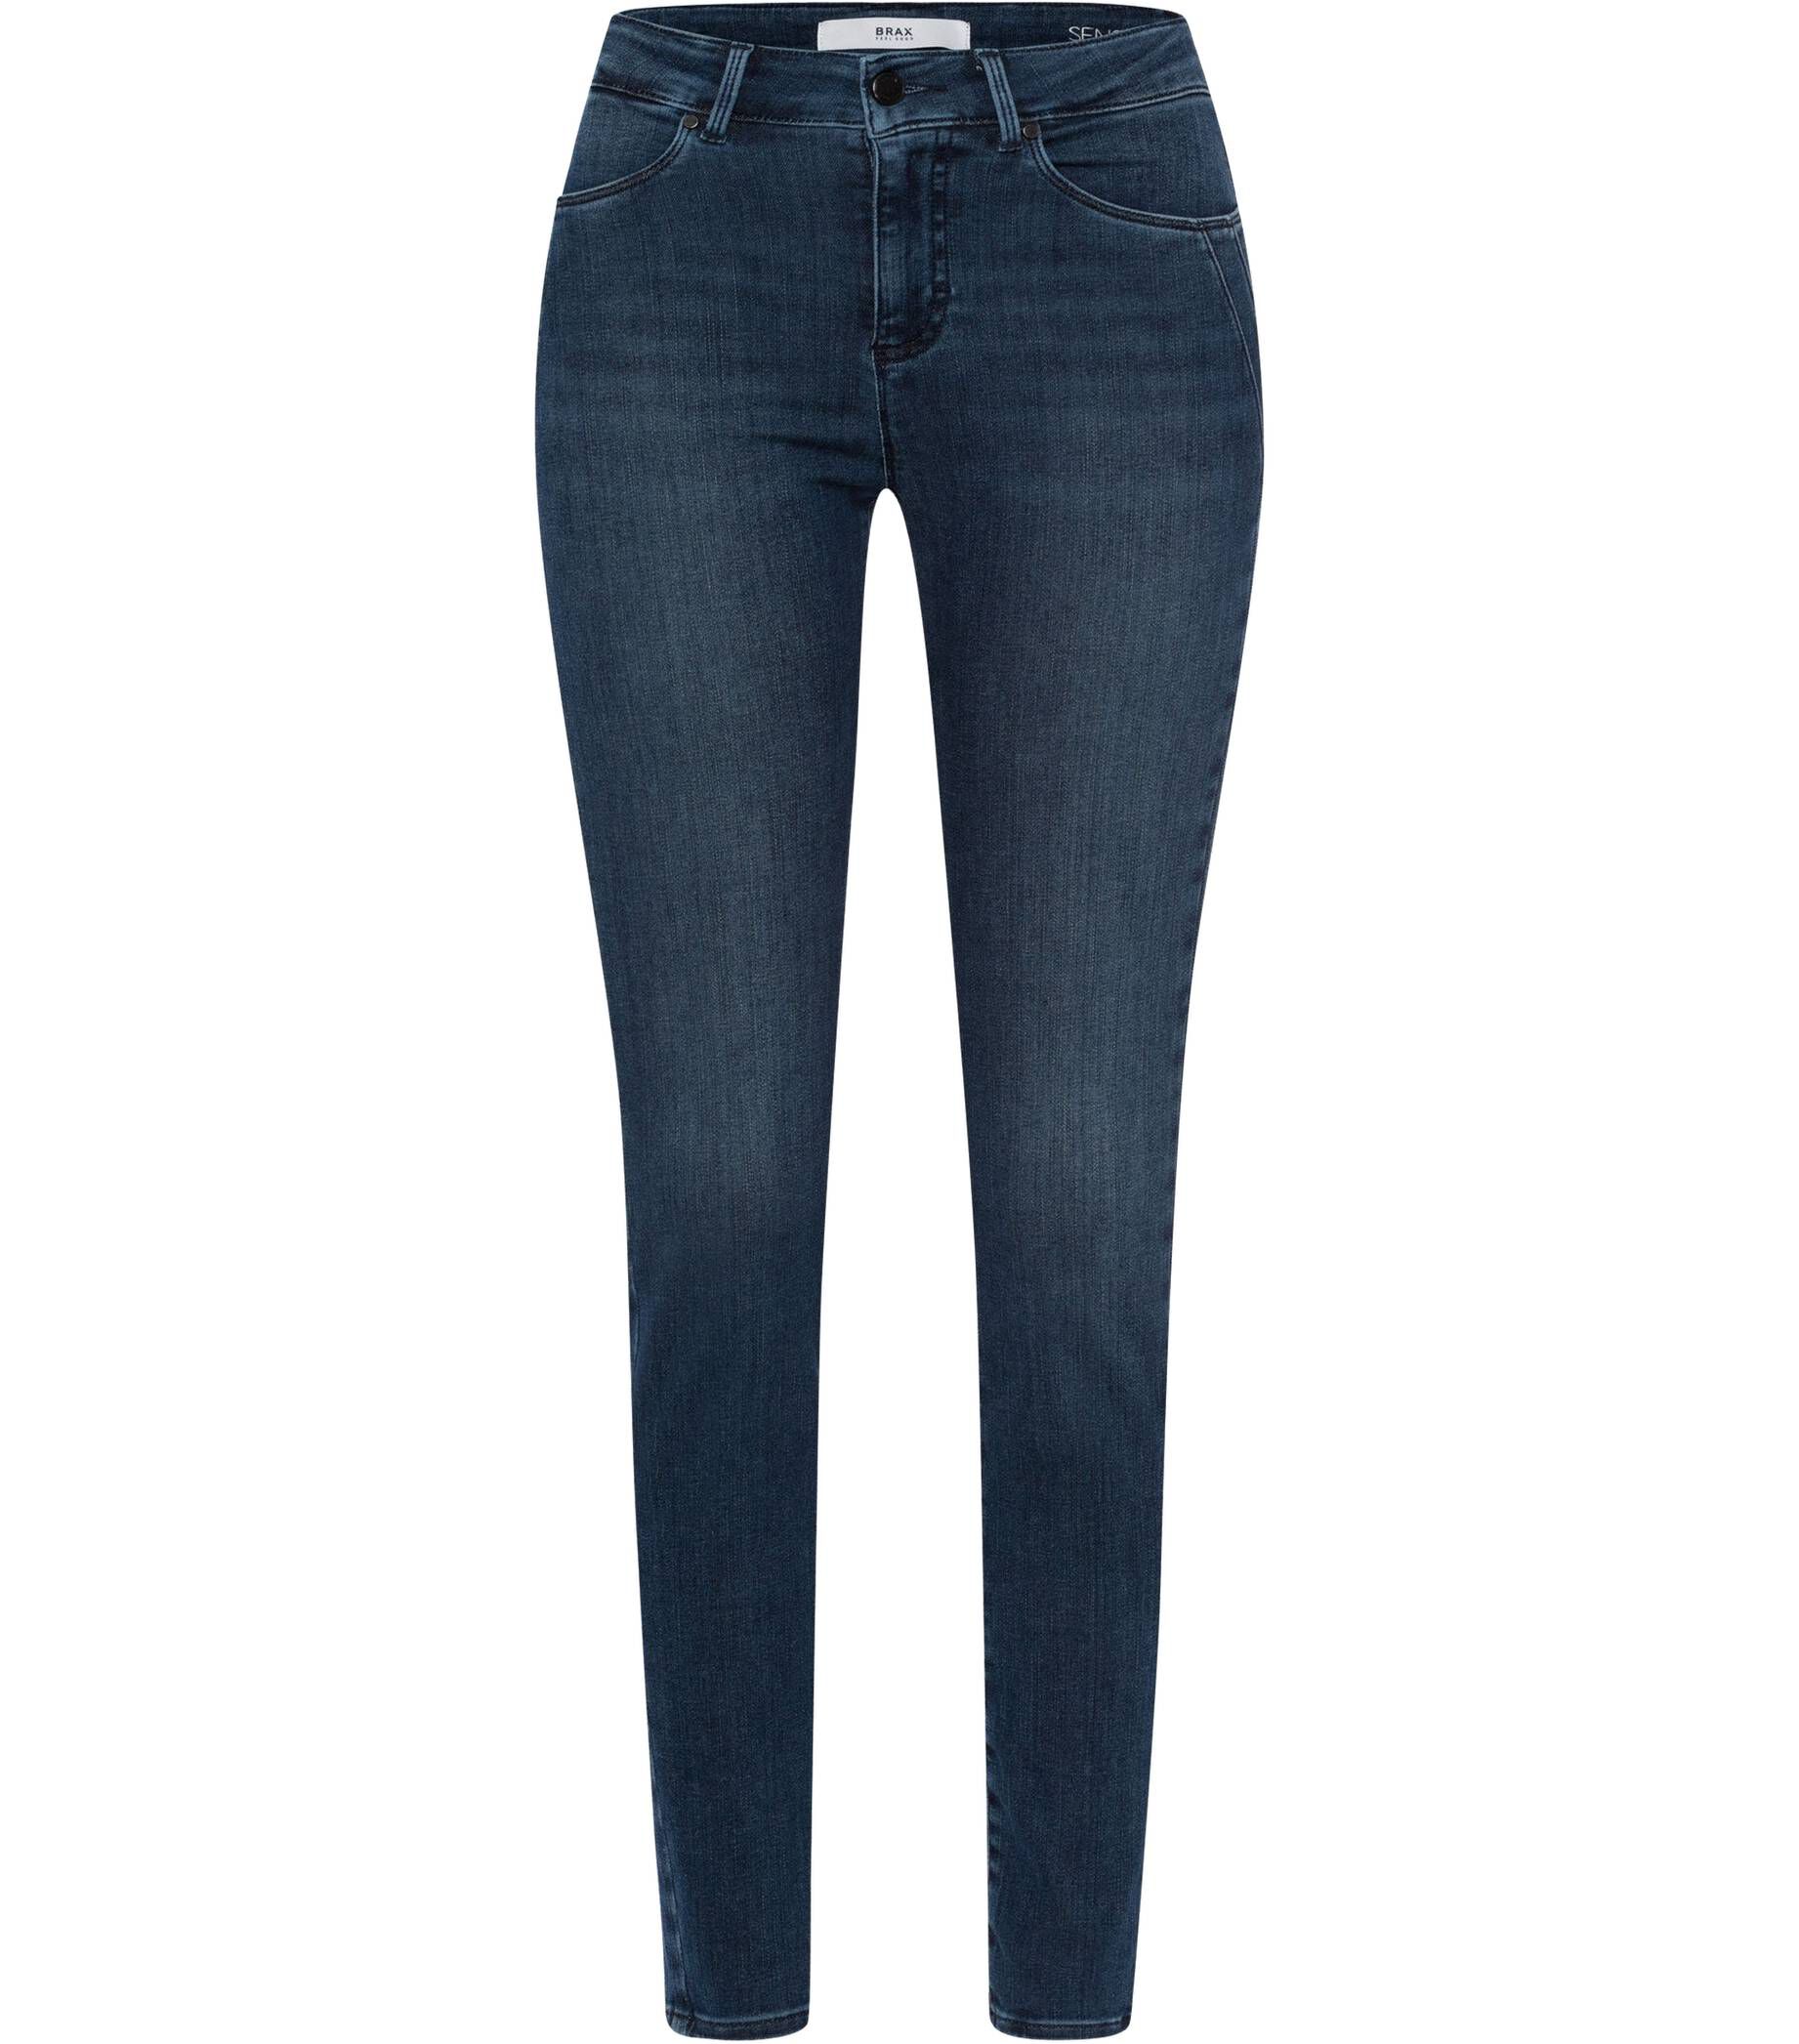 BRAX Damen Jeans STYLE.ANA Skinny Fit kaufen | engelhorn